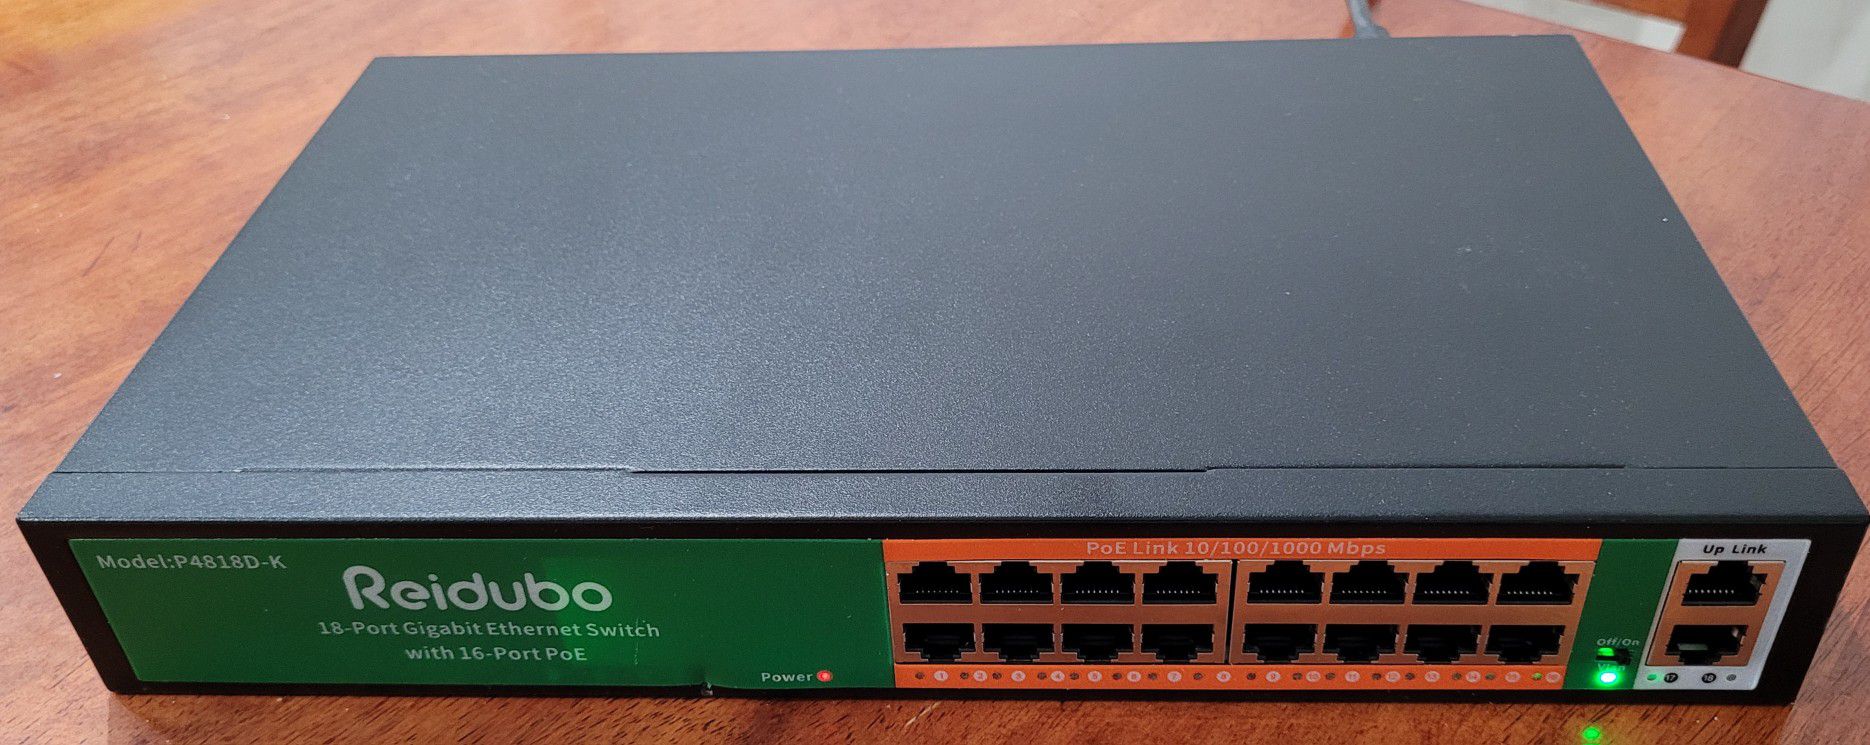 Reidubo 18 Port Ethernet Gigabit PoE Switch